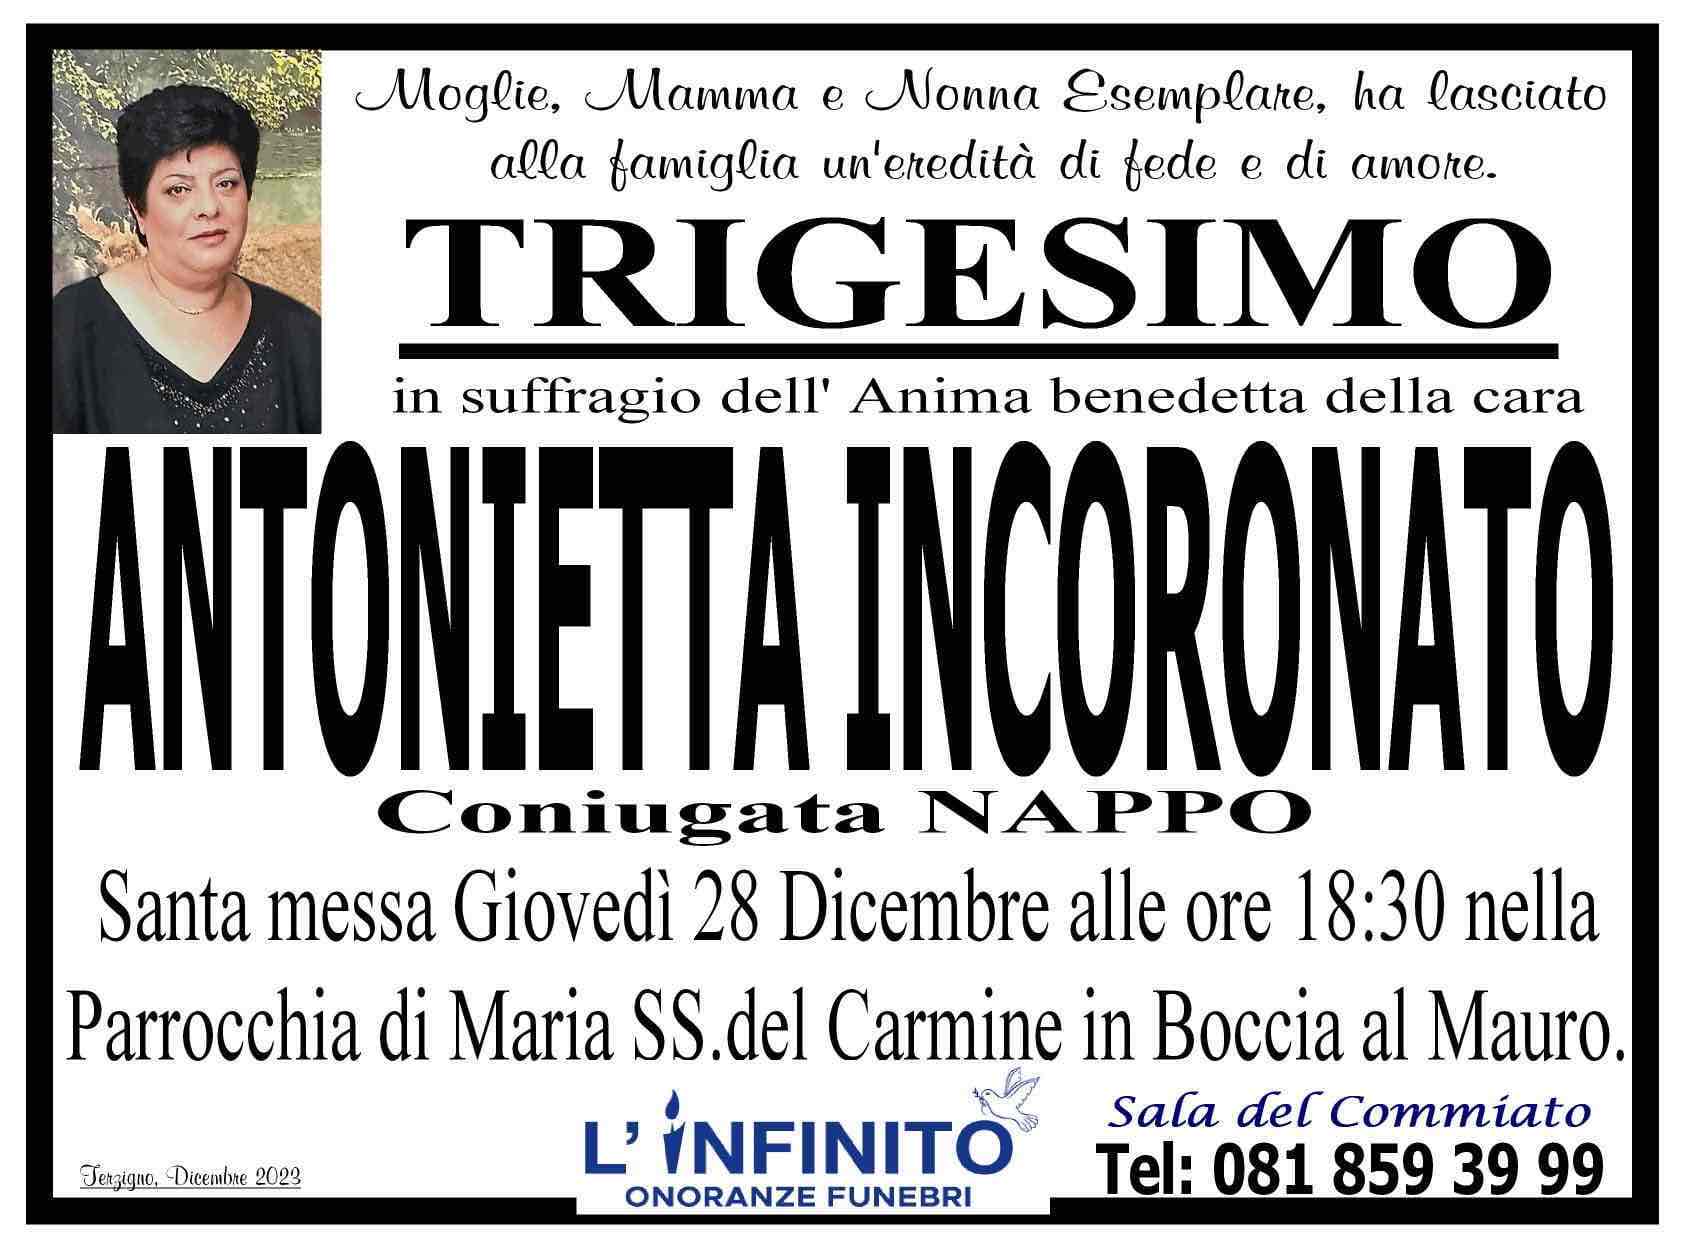 Antonietta Incoronato